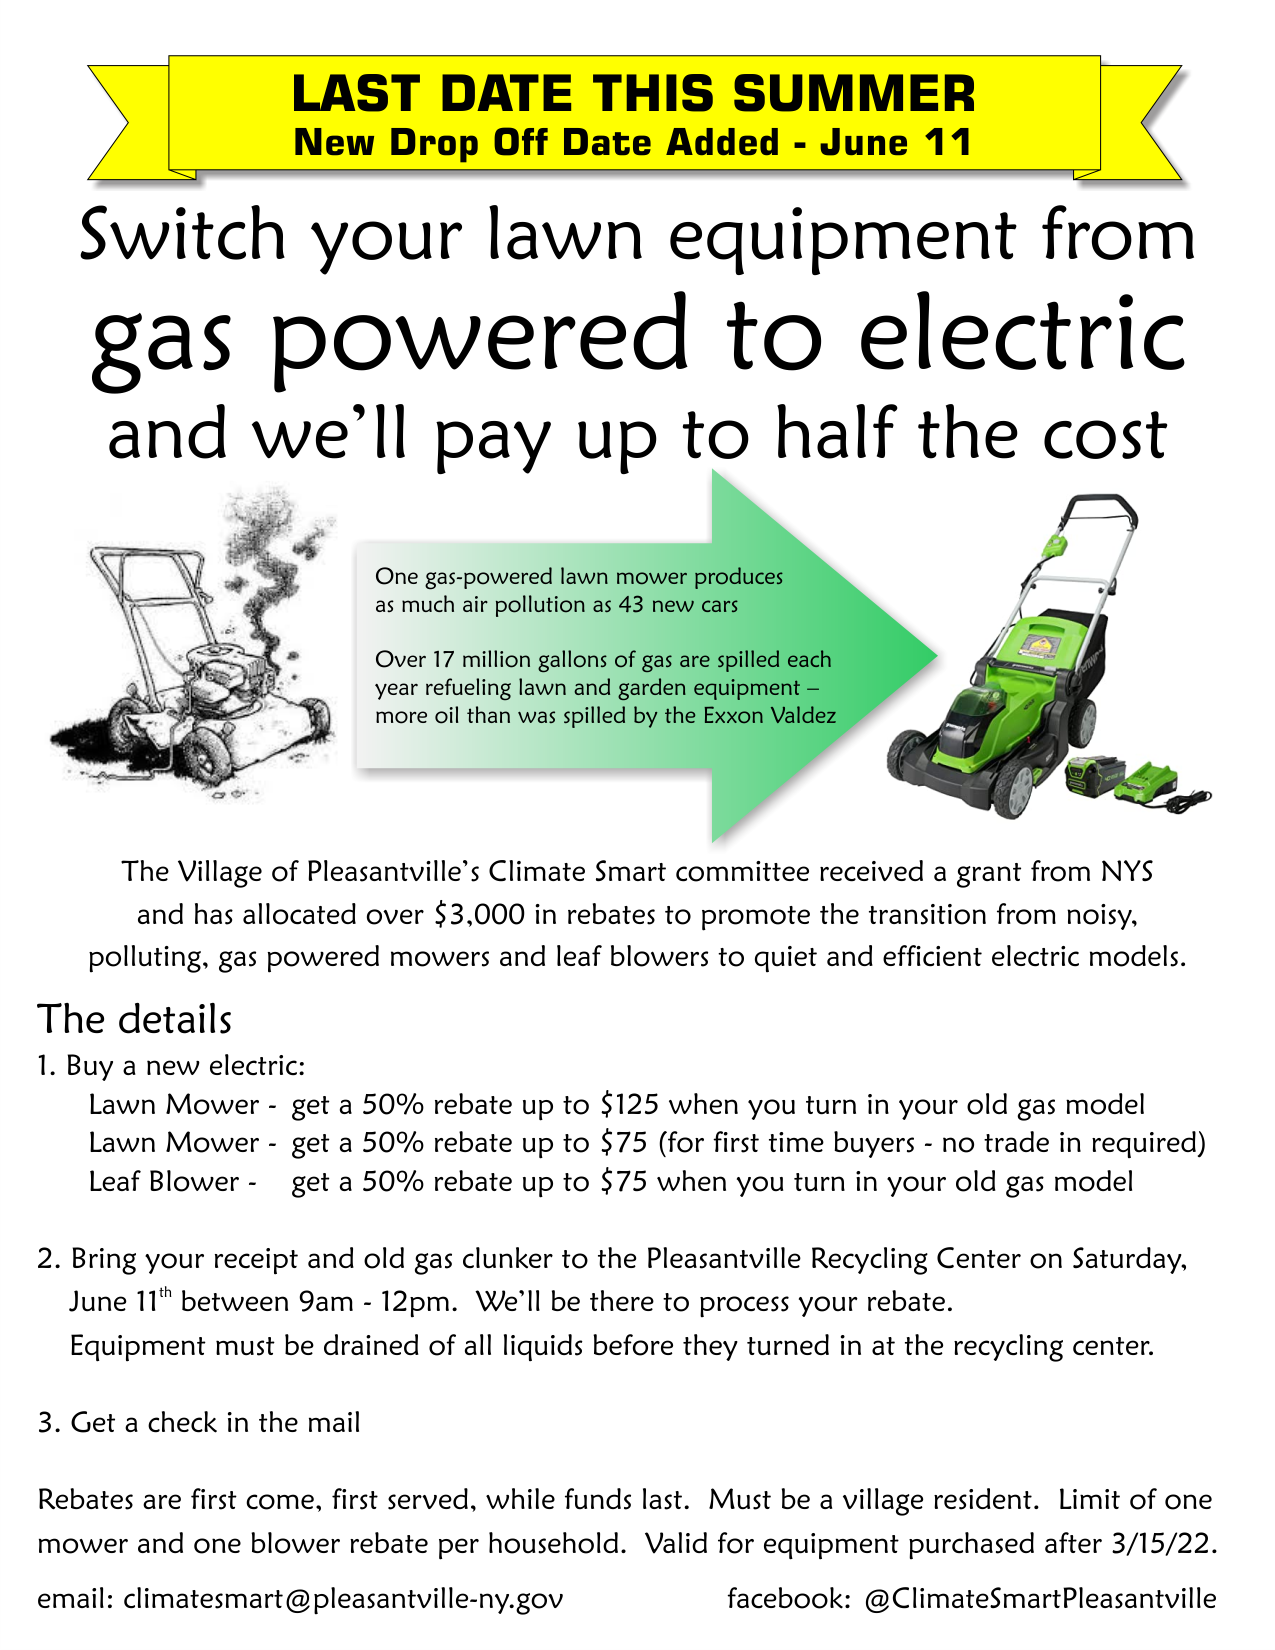 electric-lawn-mower-rebate-program-city-of-irvine